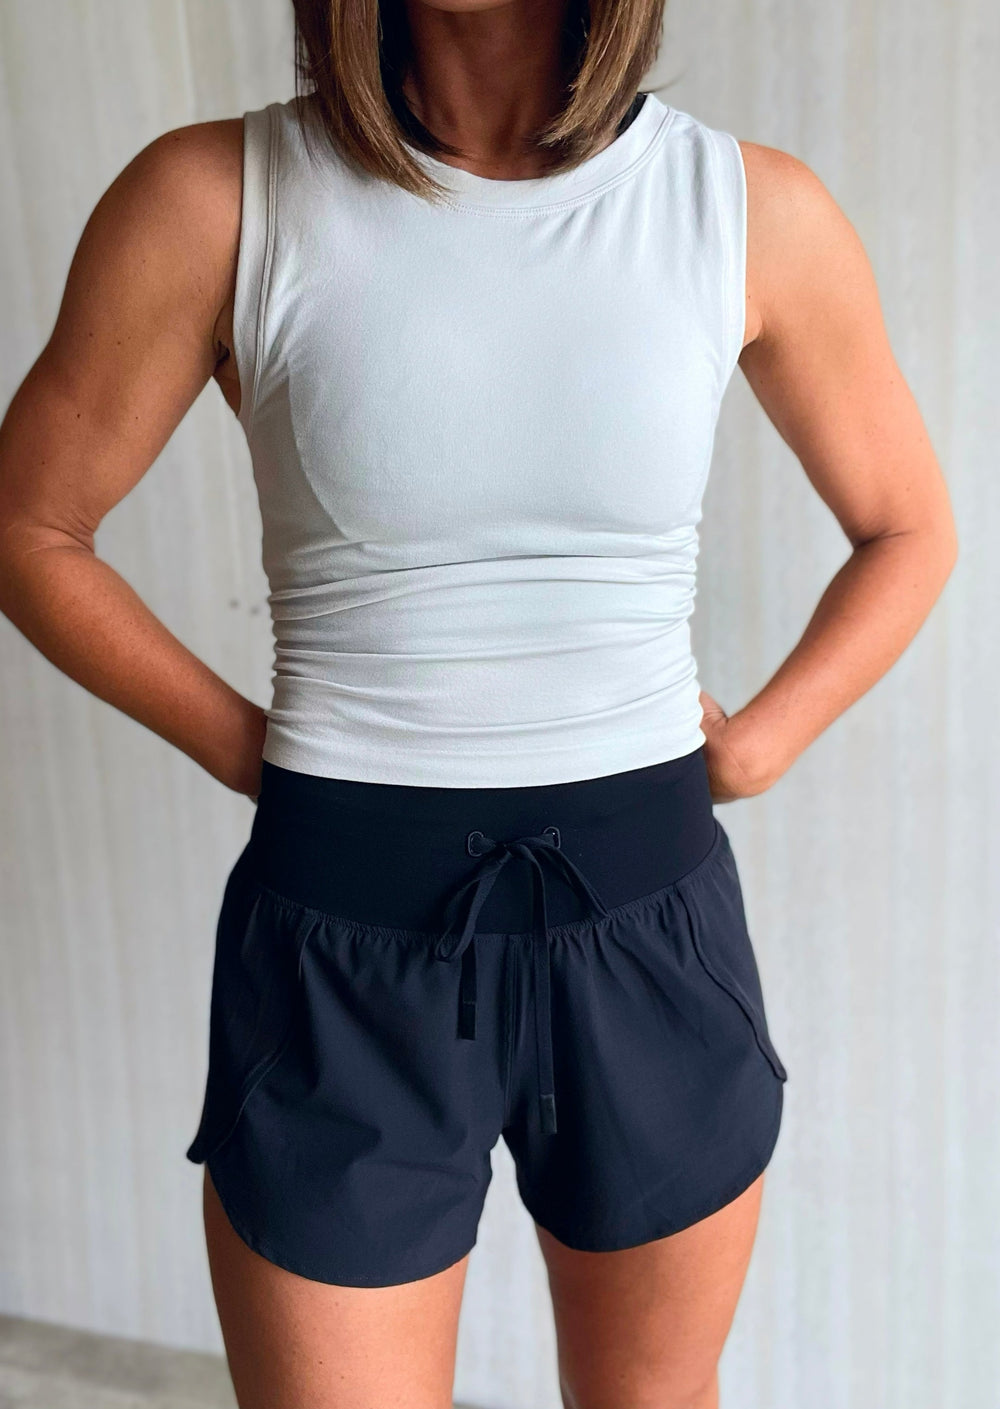 Women's Black Dolphin Shorts with drawstring | Women's athleisure black shorts